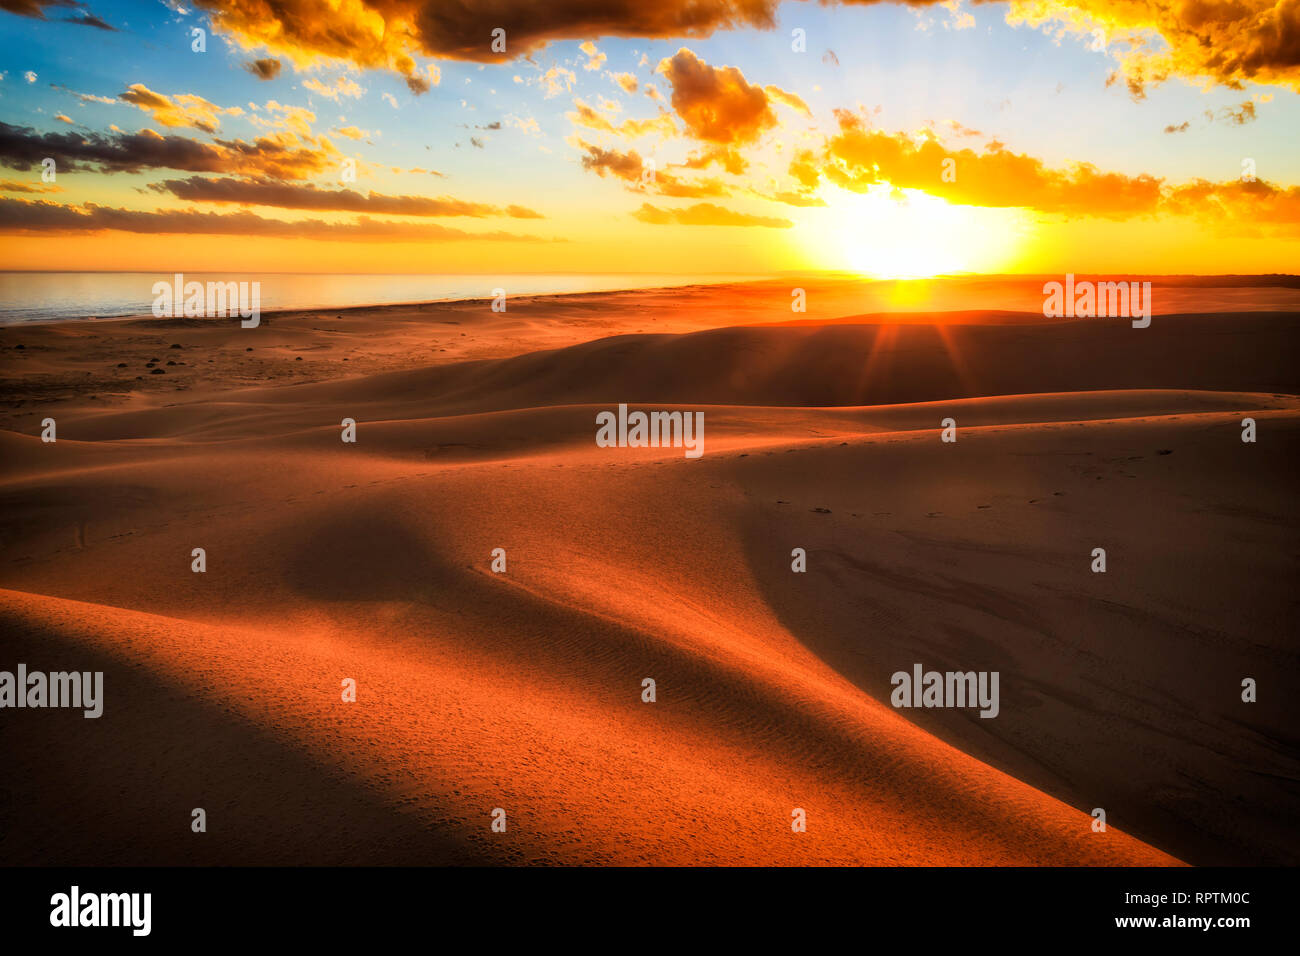 Rays of sun over horizon at sunset in arid desert sand dunes of Stockton beach on Australian pacific coast with warm sunlight casting shades between s Stock Photo